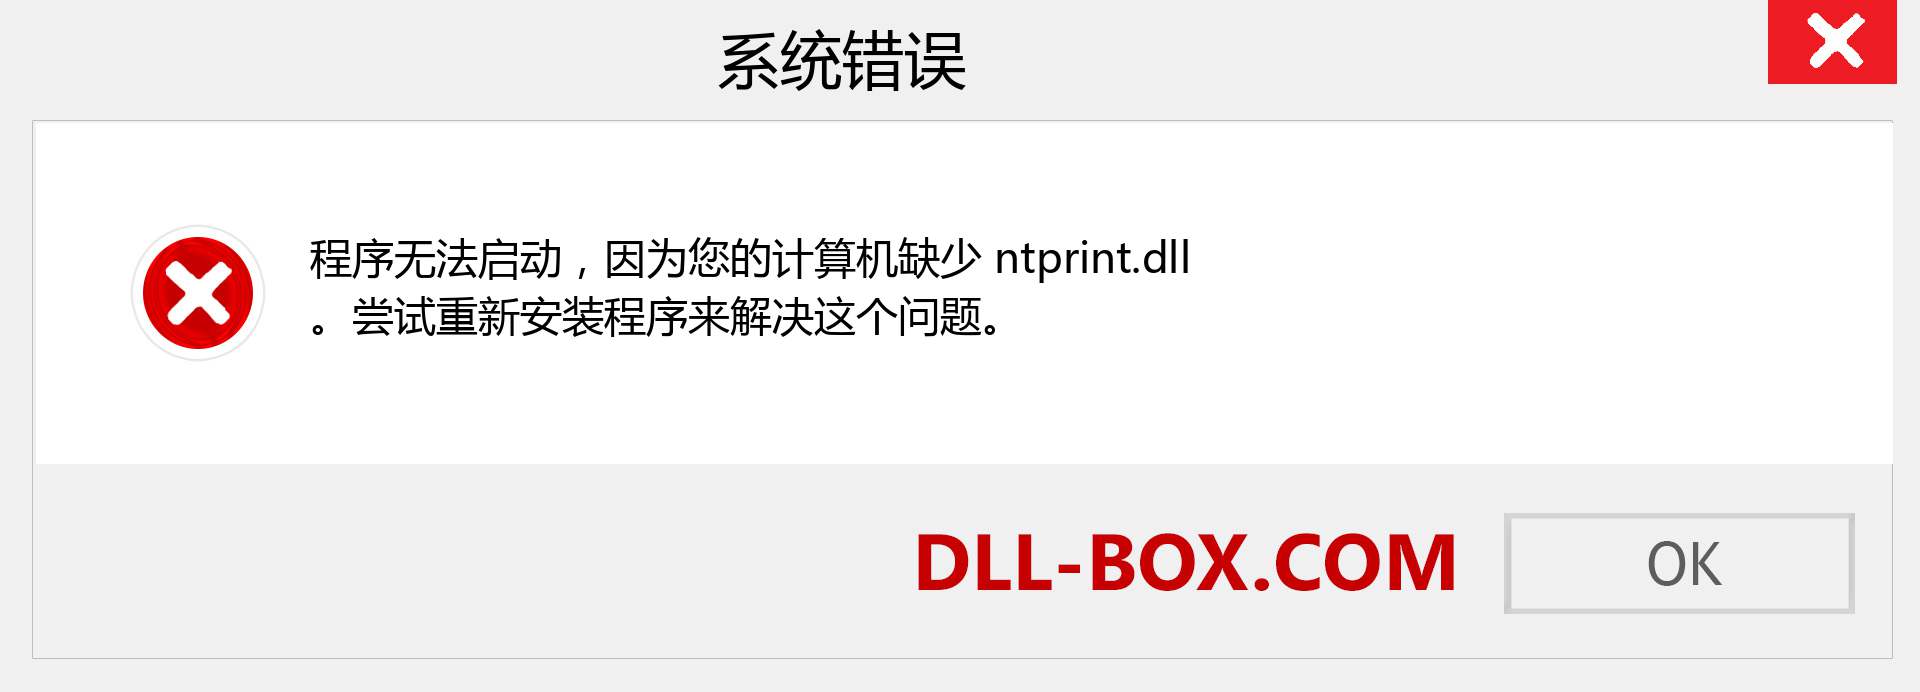 ntprint.dll 文件丢失？。 适用于 Windows 7、8、10 的下载 - 修复 Windows、照片、图像上的 ntprint dll 丢失错误